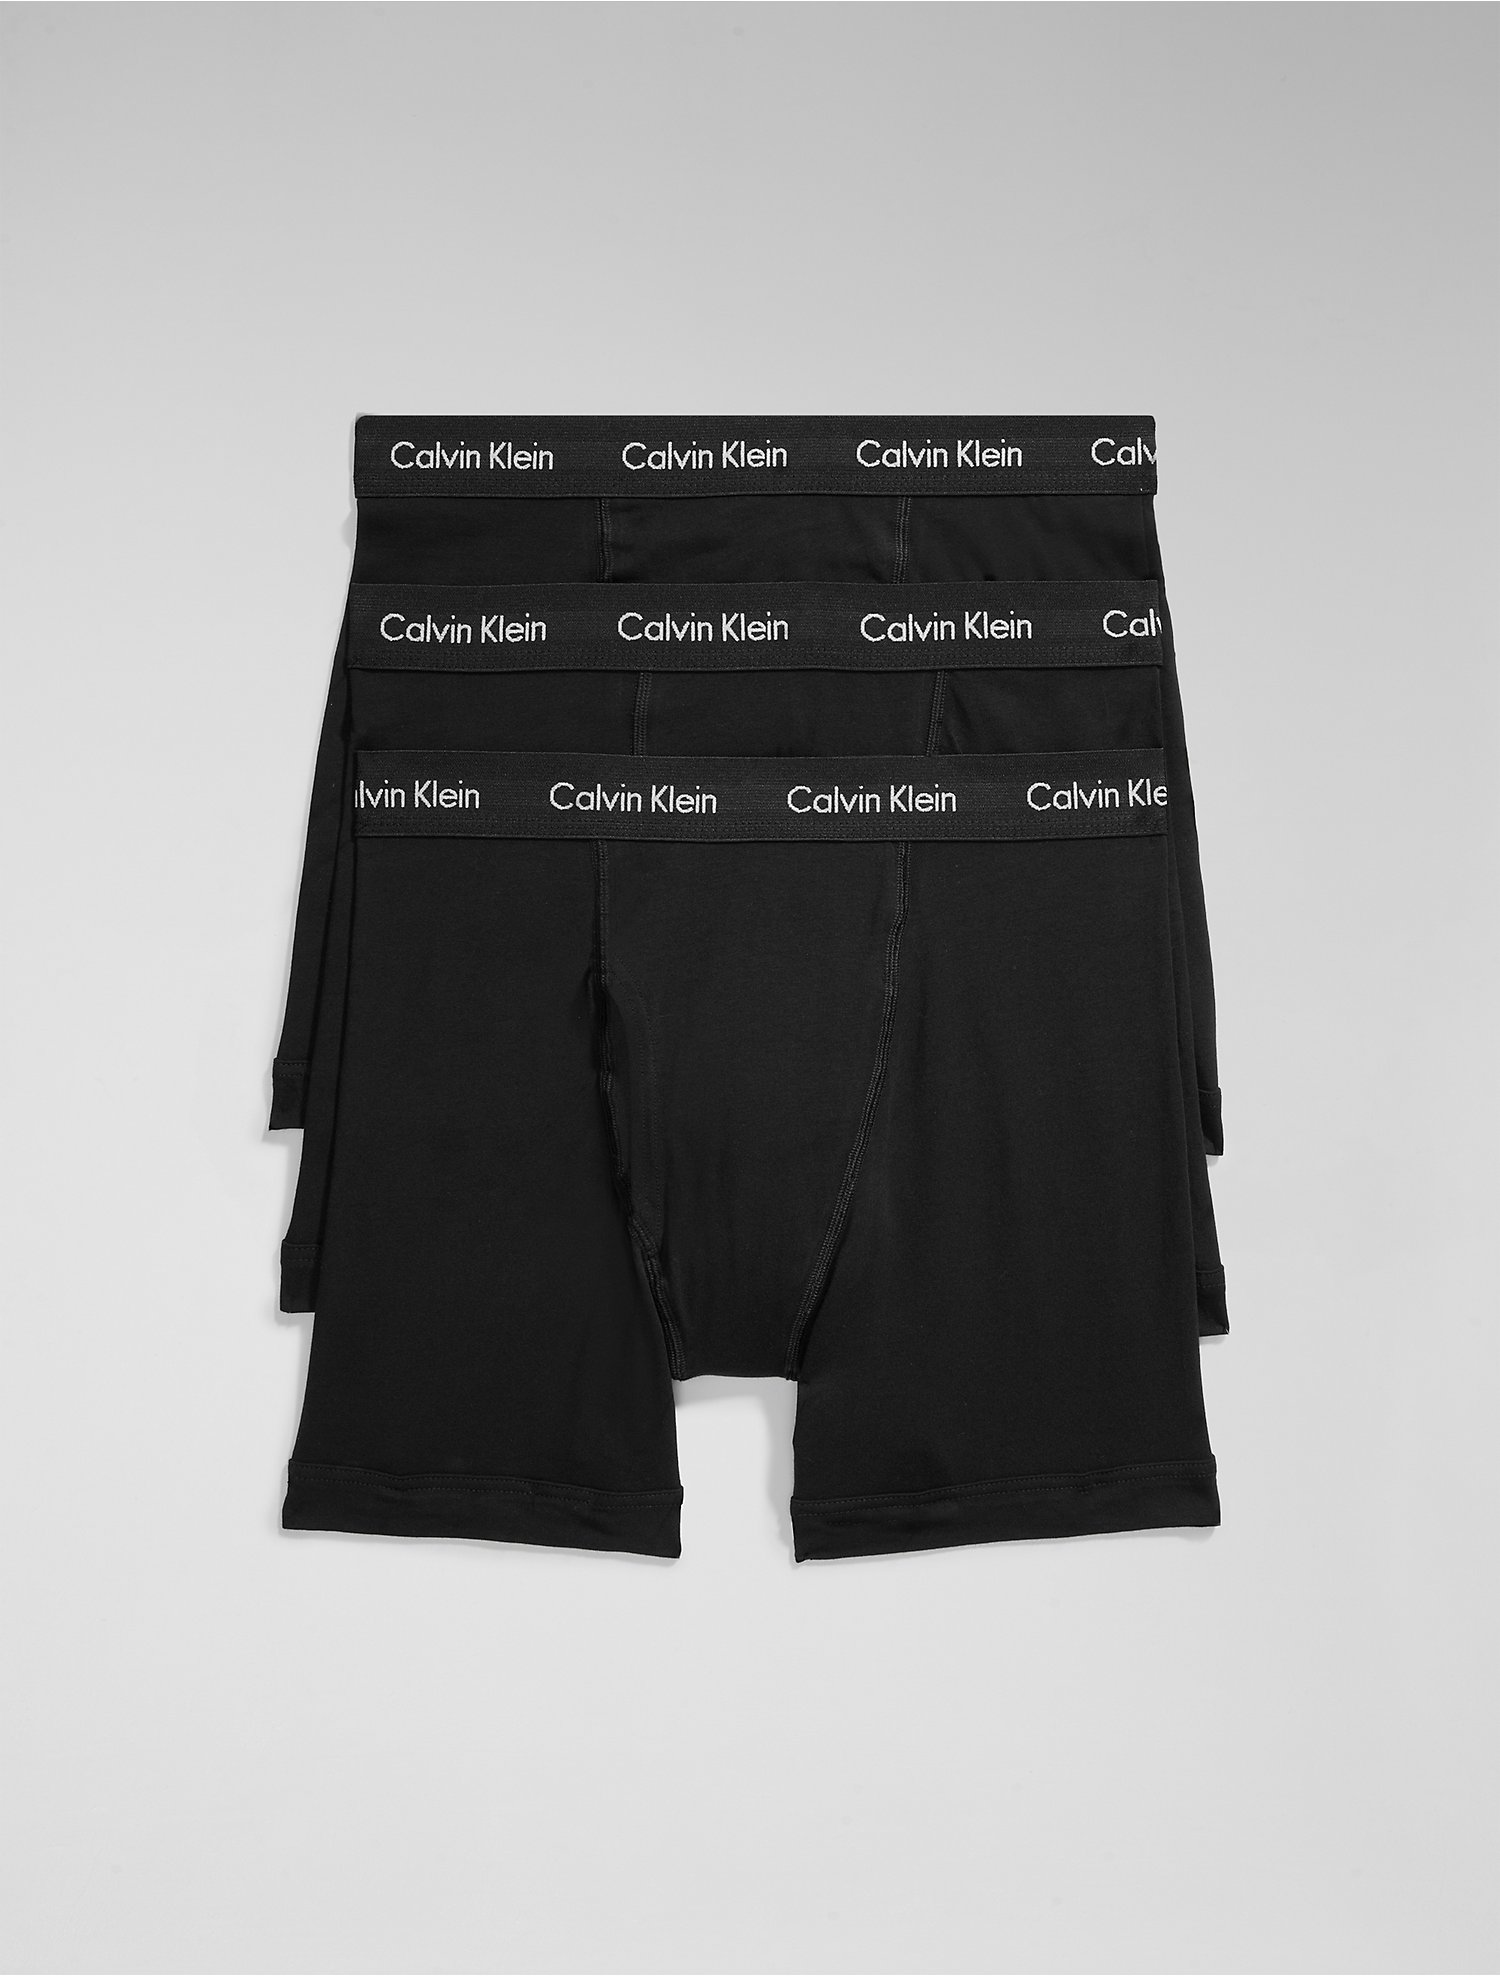 Palabra neumático menor Cotton Stretch 3-Pack Boxer Brief | Calvin Klein